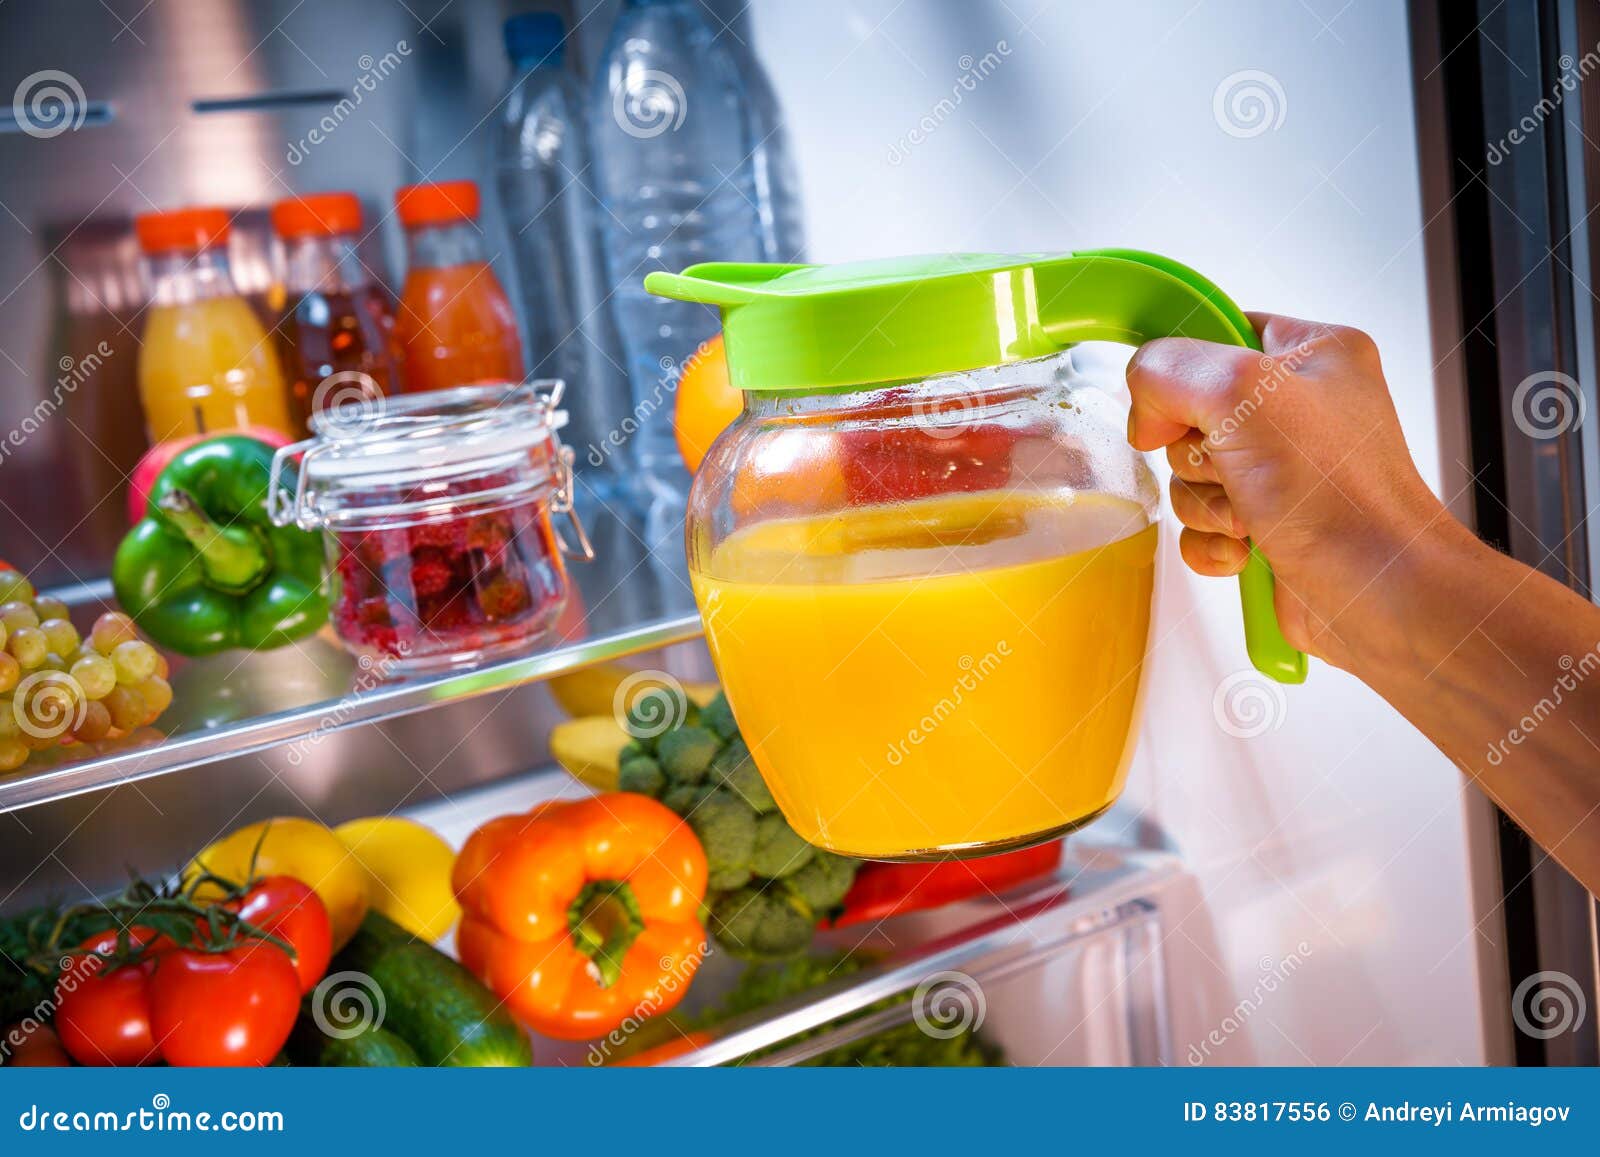 There some juice in the fridge. Сок в холодильнике. Апельсиновый сок хранение в холодильнике. Смузи в холодильнике. Соки воды.